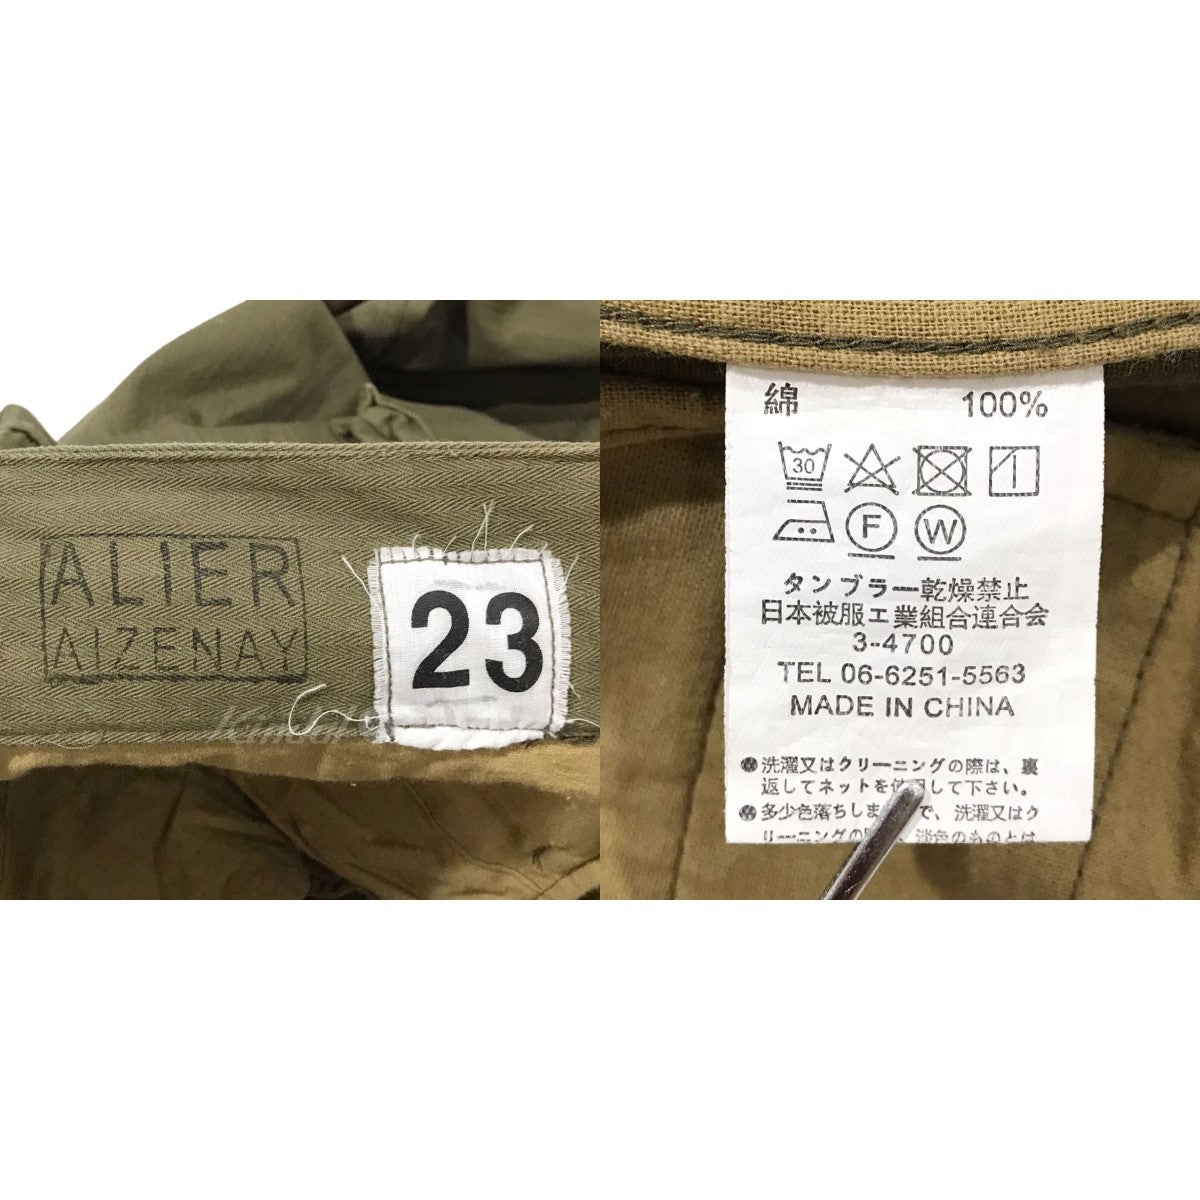 MILITARY(ミリタリー) カーゴパンツ M-47 復刻 ARIEL AIZENAY アリエル 